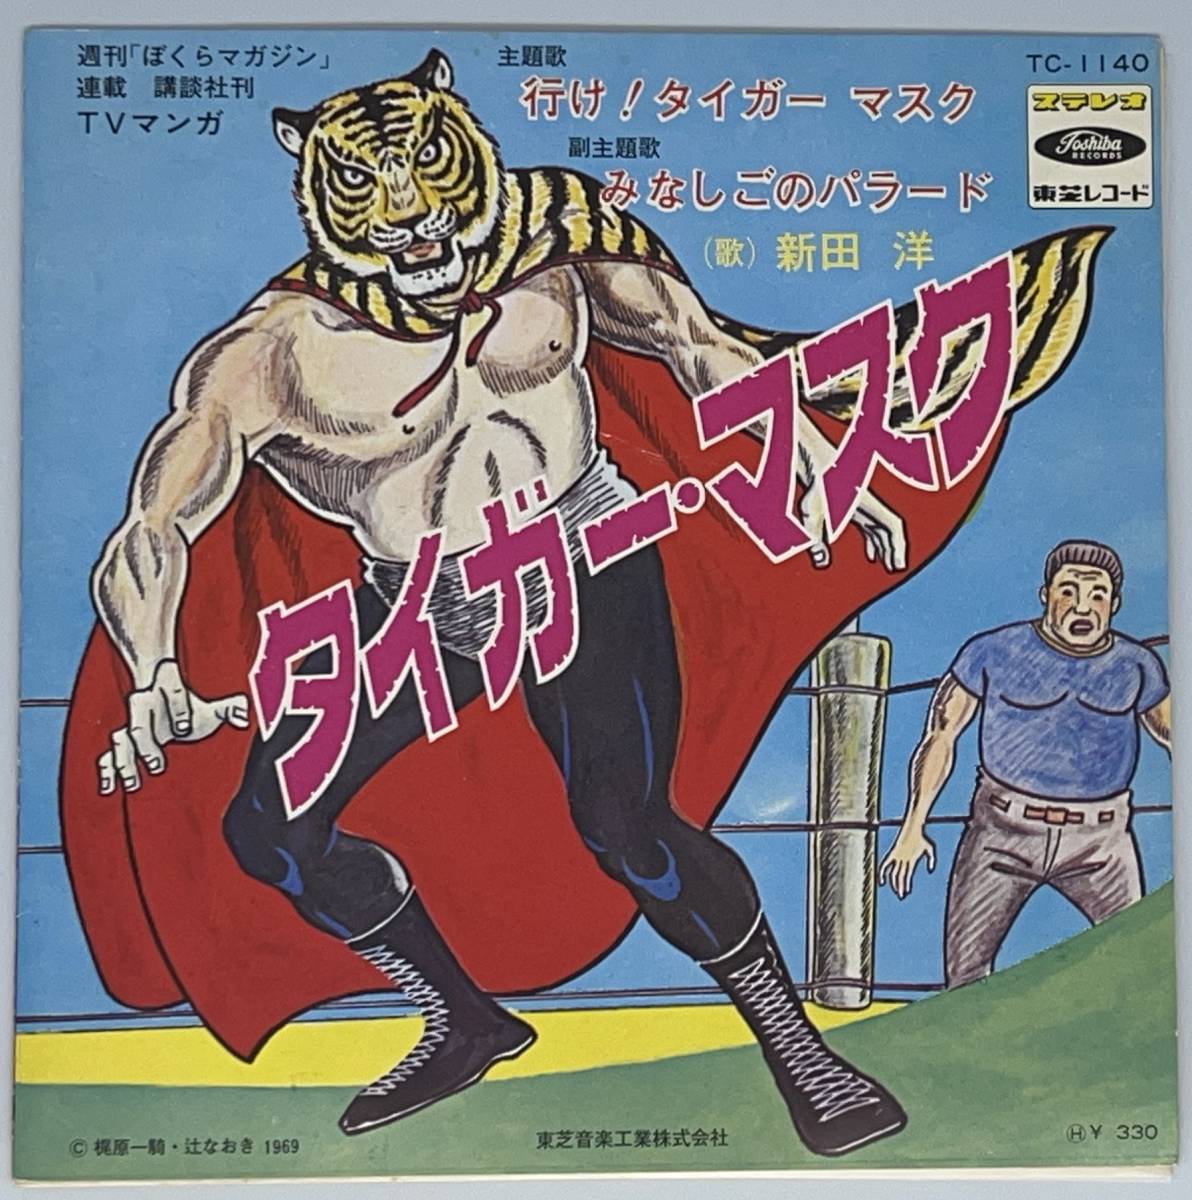  Tiger Mask line .! Tiger Mask /. none .. pala-do single record new rice field .* Kikuchi Shunsuke red record +sono seat 